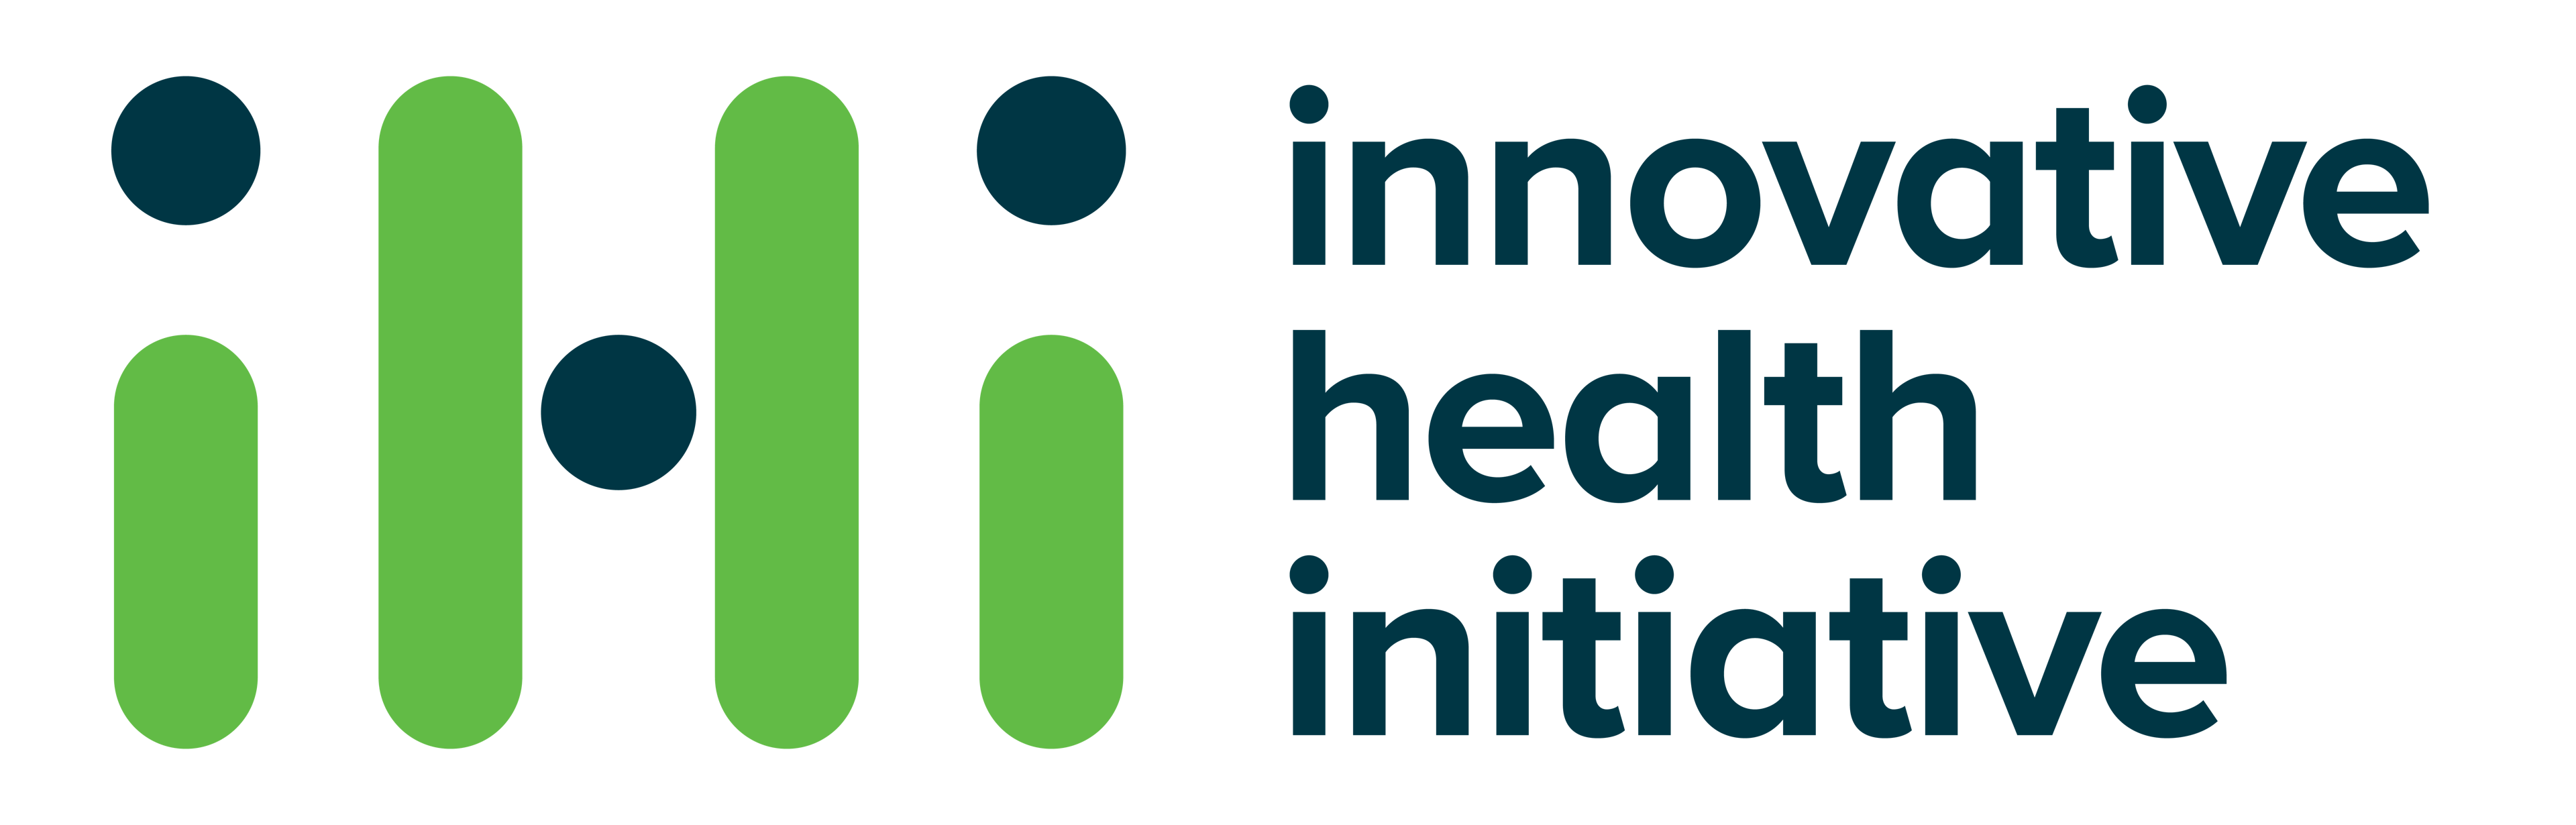 Innovative health initiative